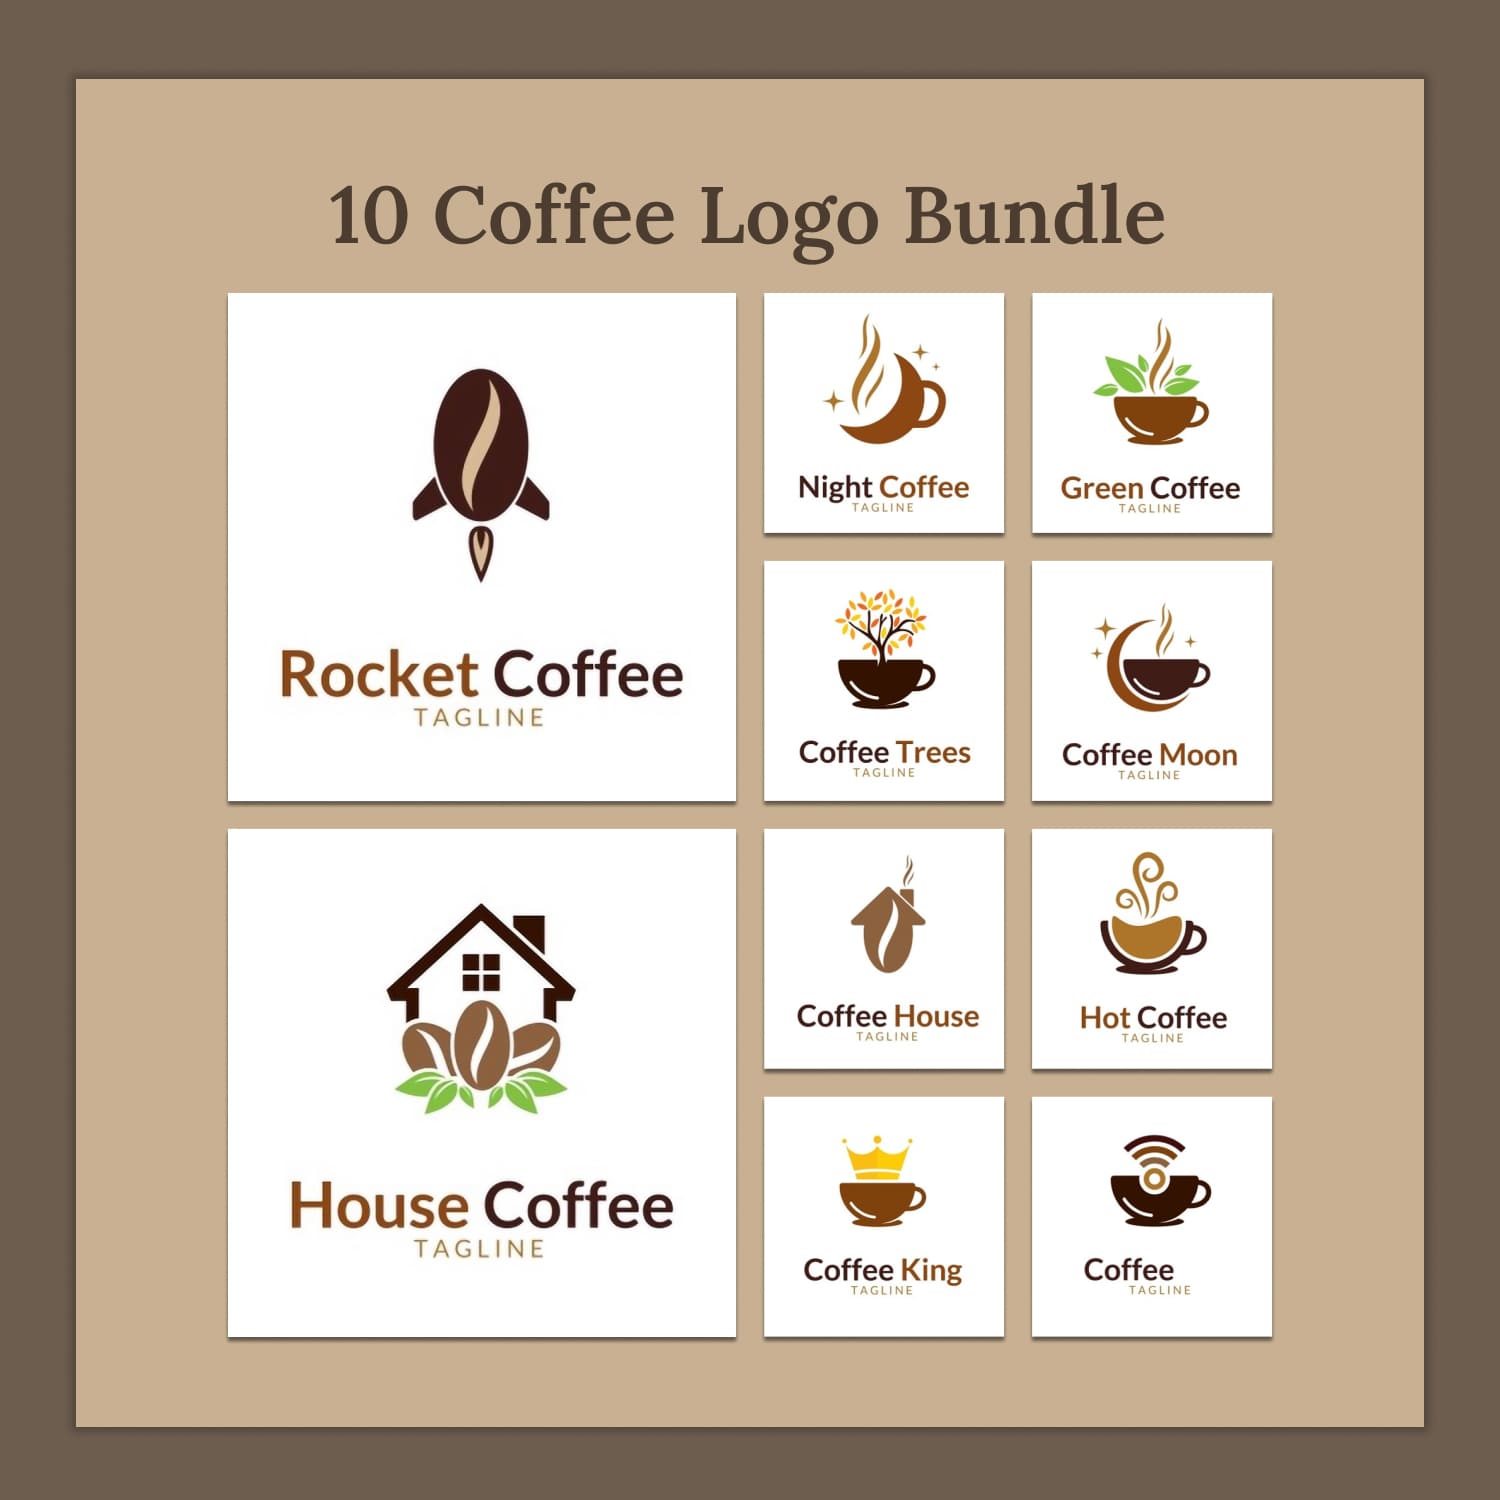 10 coffee logo bundle - main image preview.